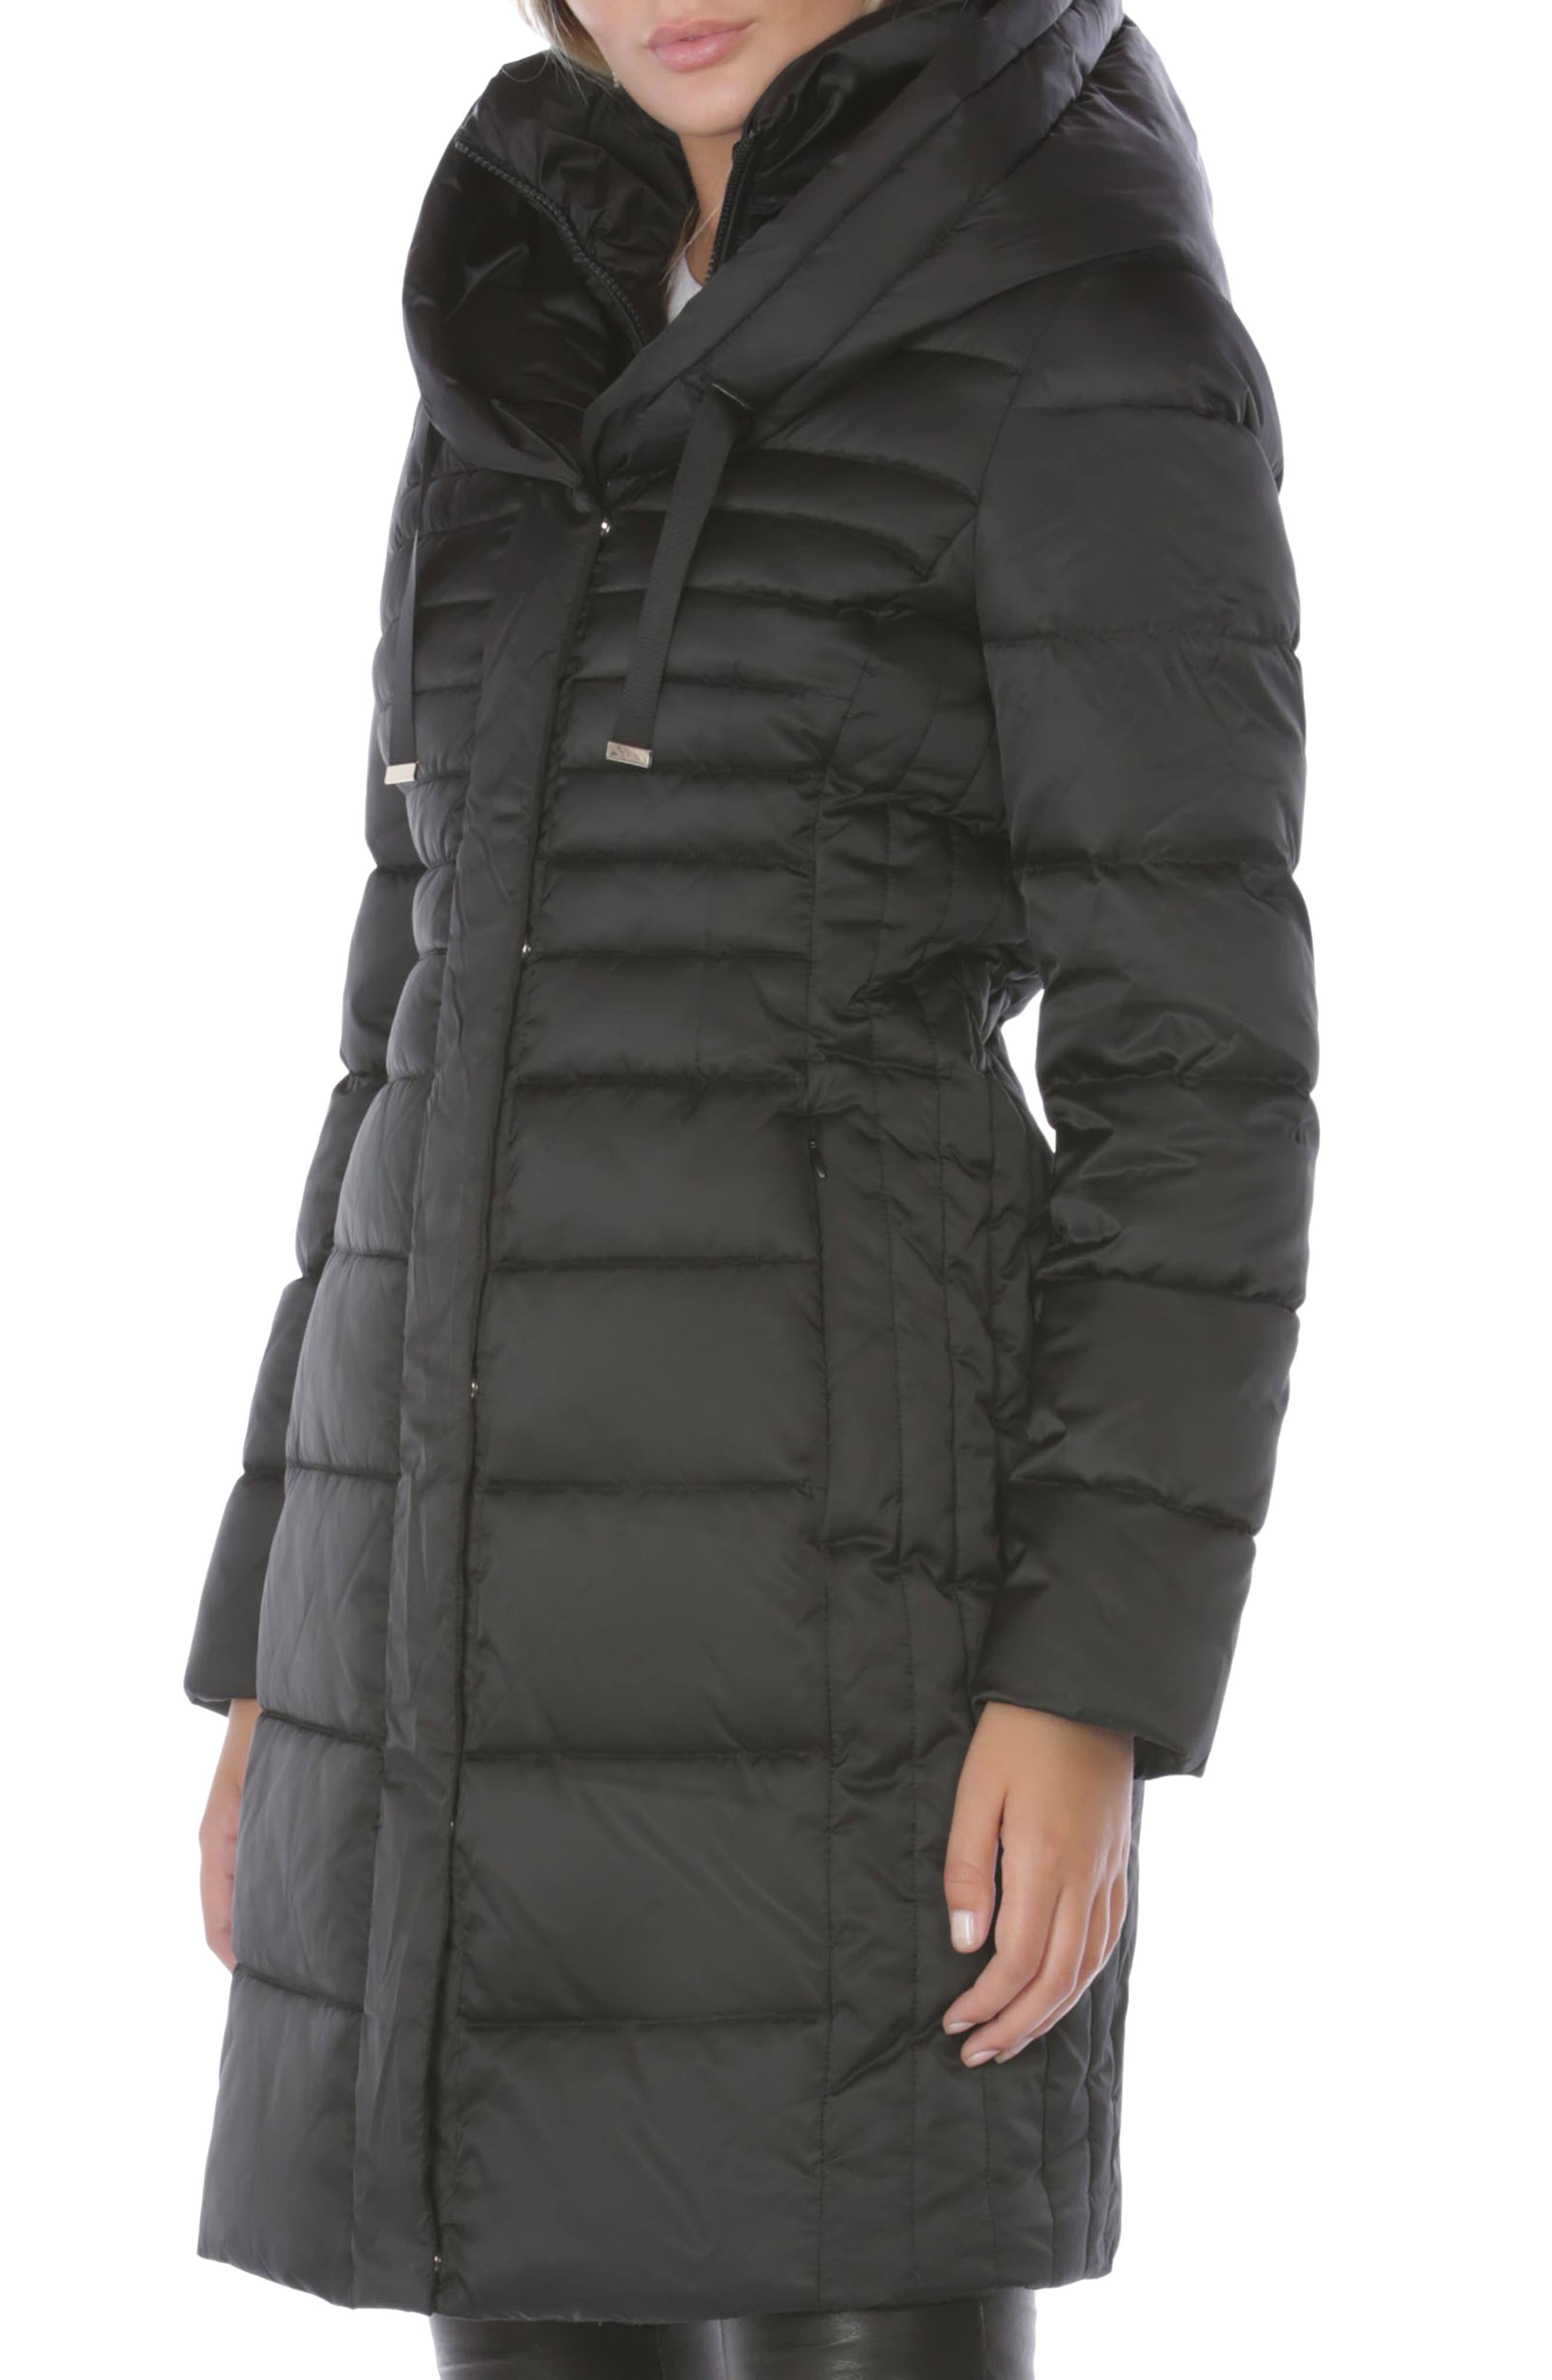 Koalaroo Puffer jacket WOMEN FASHION Coats Puffer jacket Print discount 64% Multicolored L 